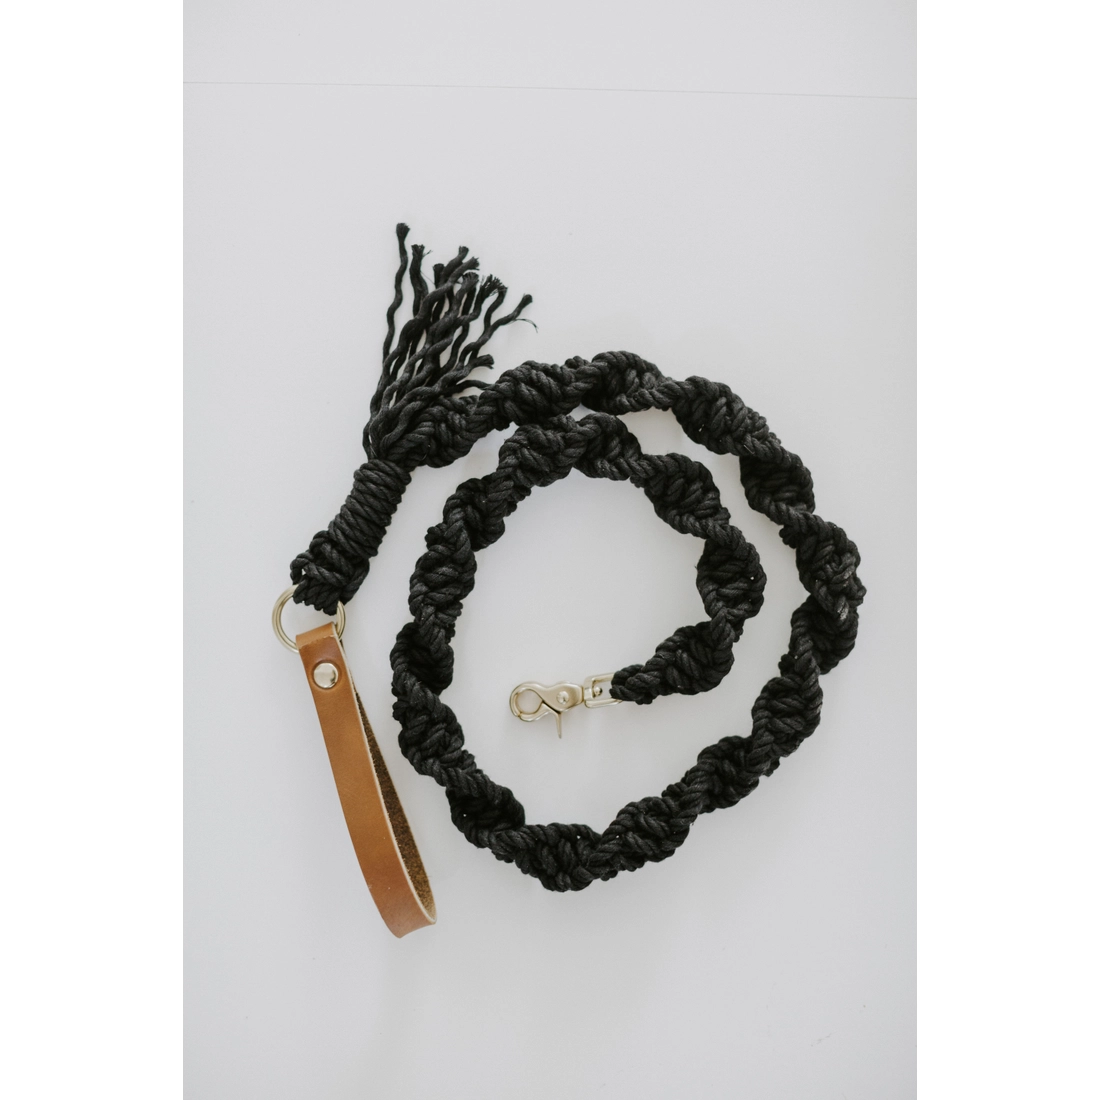 Macrame Dog Leash - Black Rope / Brown Leather Handle